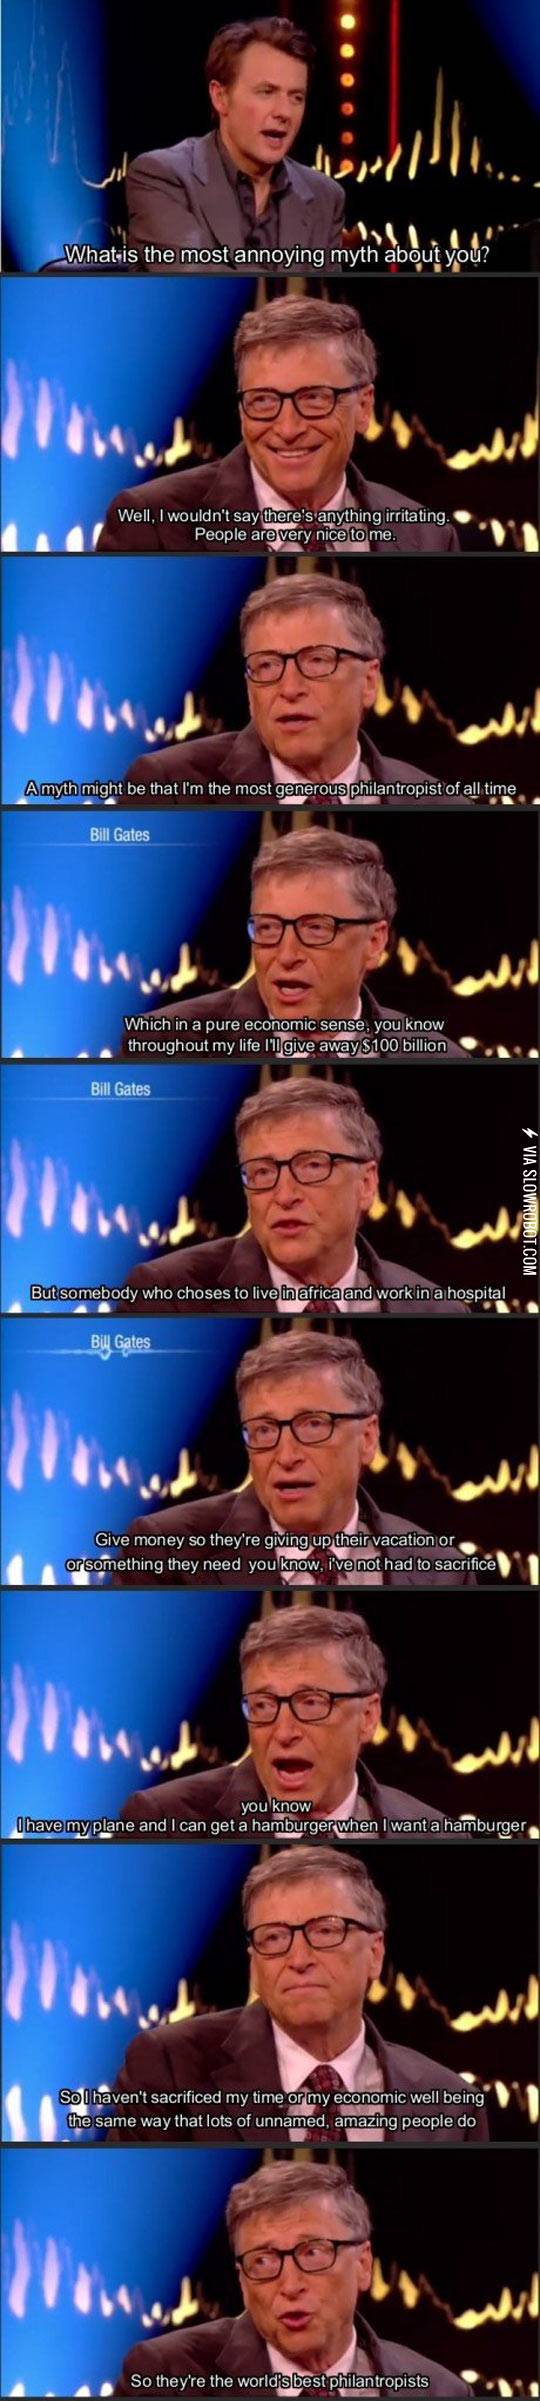 Bill+Gates+Is+The+Man